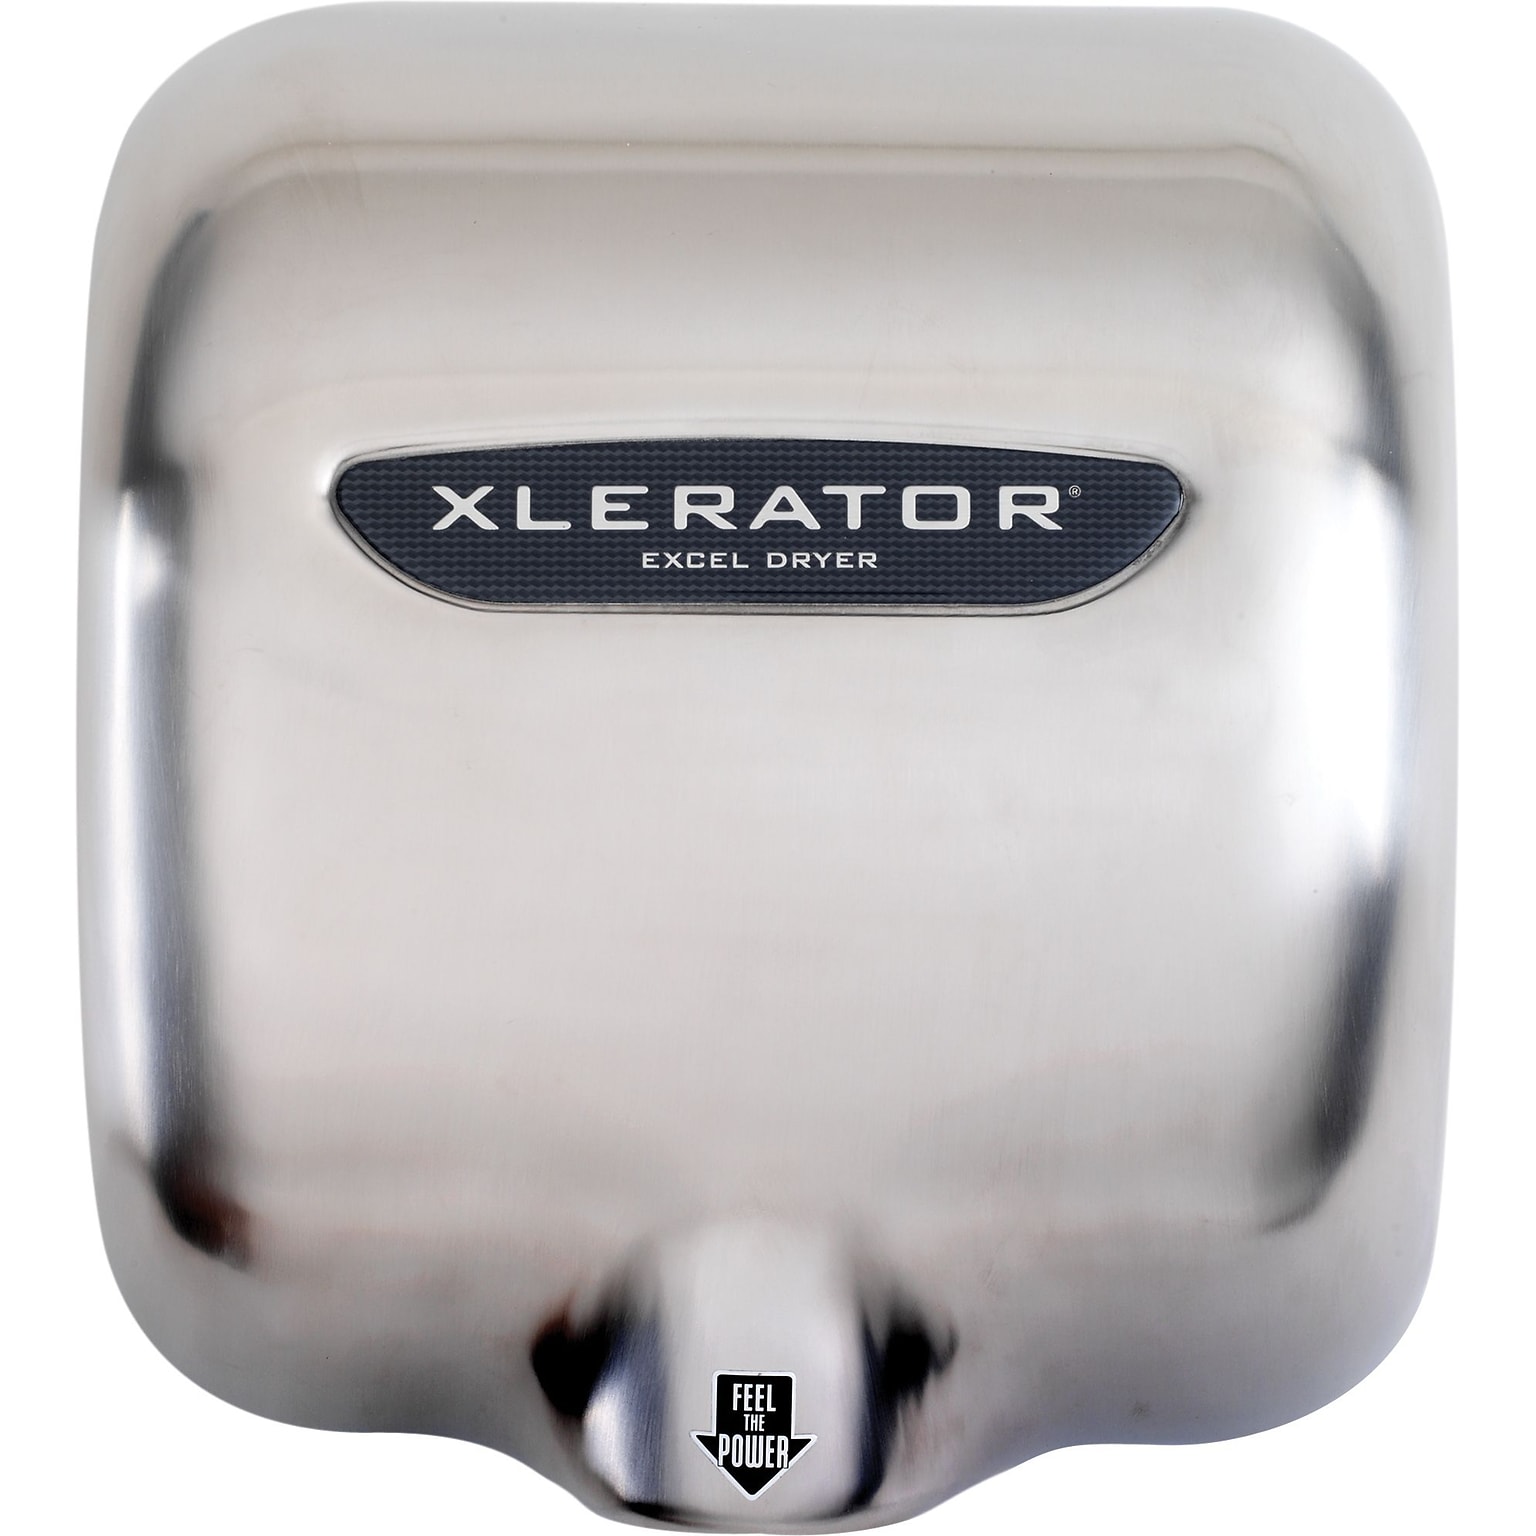 XLERATOR® XL-C 110-120V Hand Dryer, Chrome Plated Cover